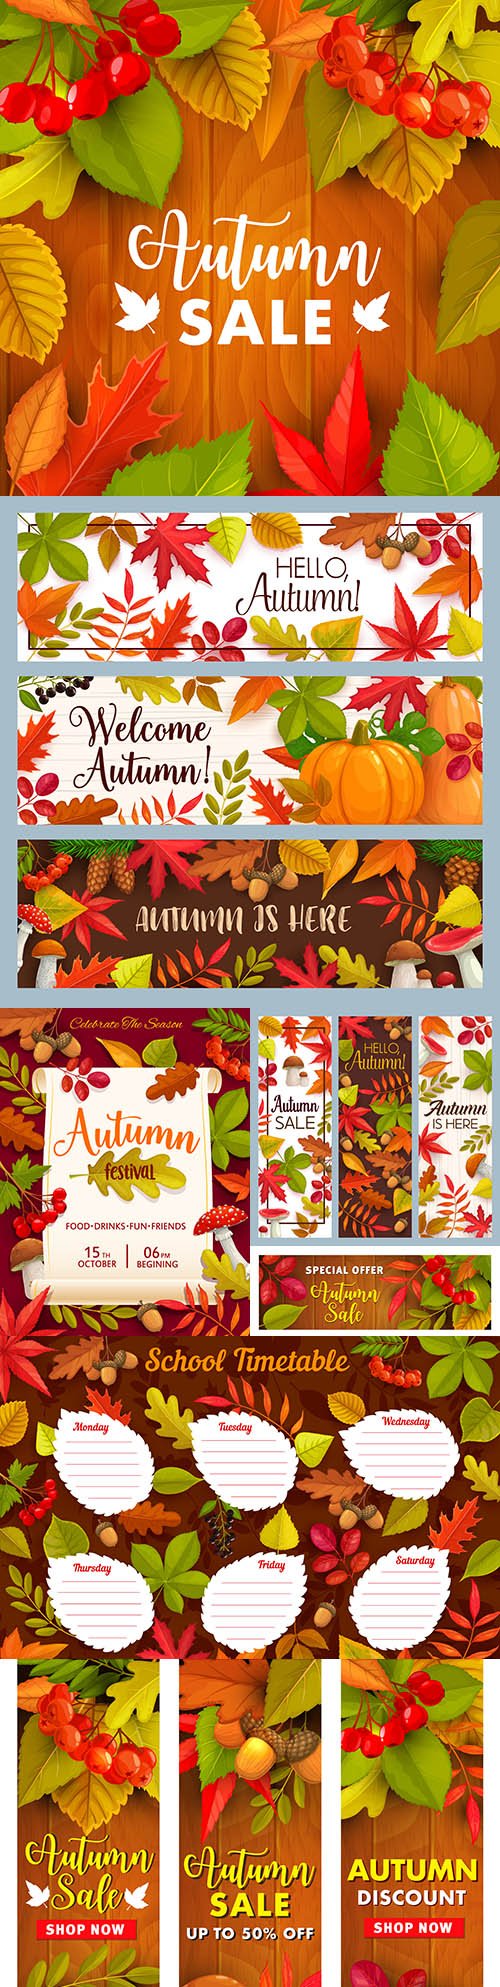 Autumn sale season discount and price illustration poster